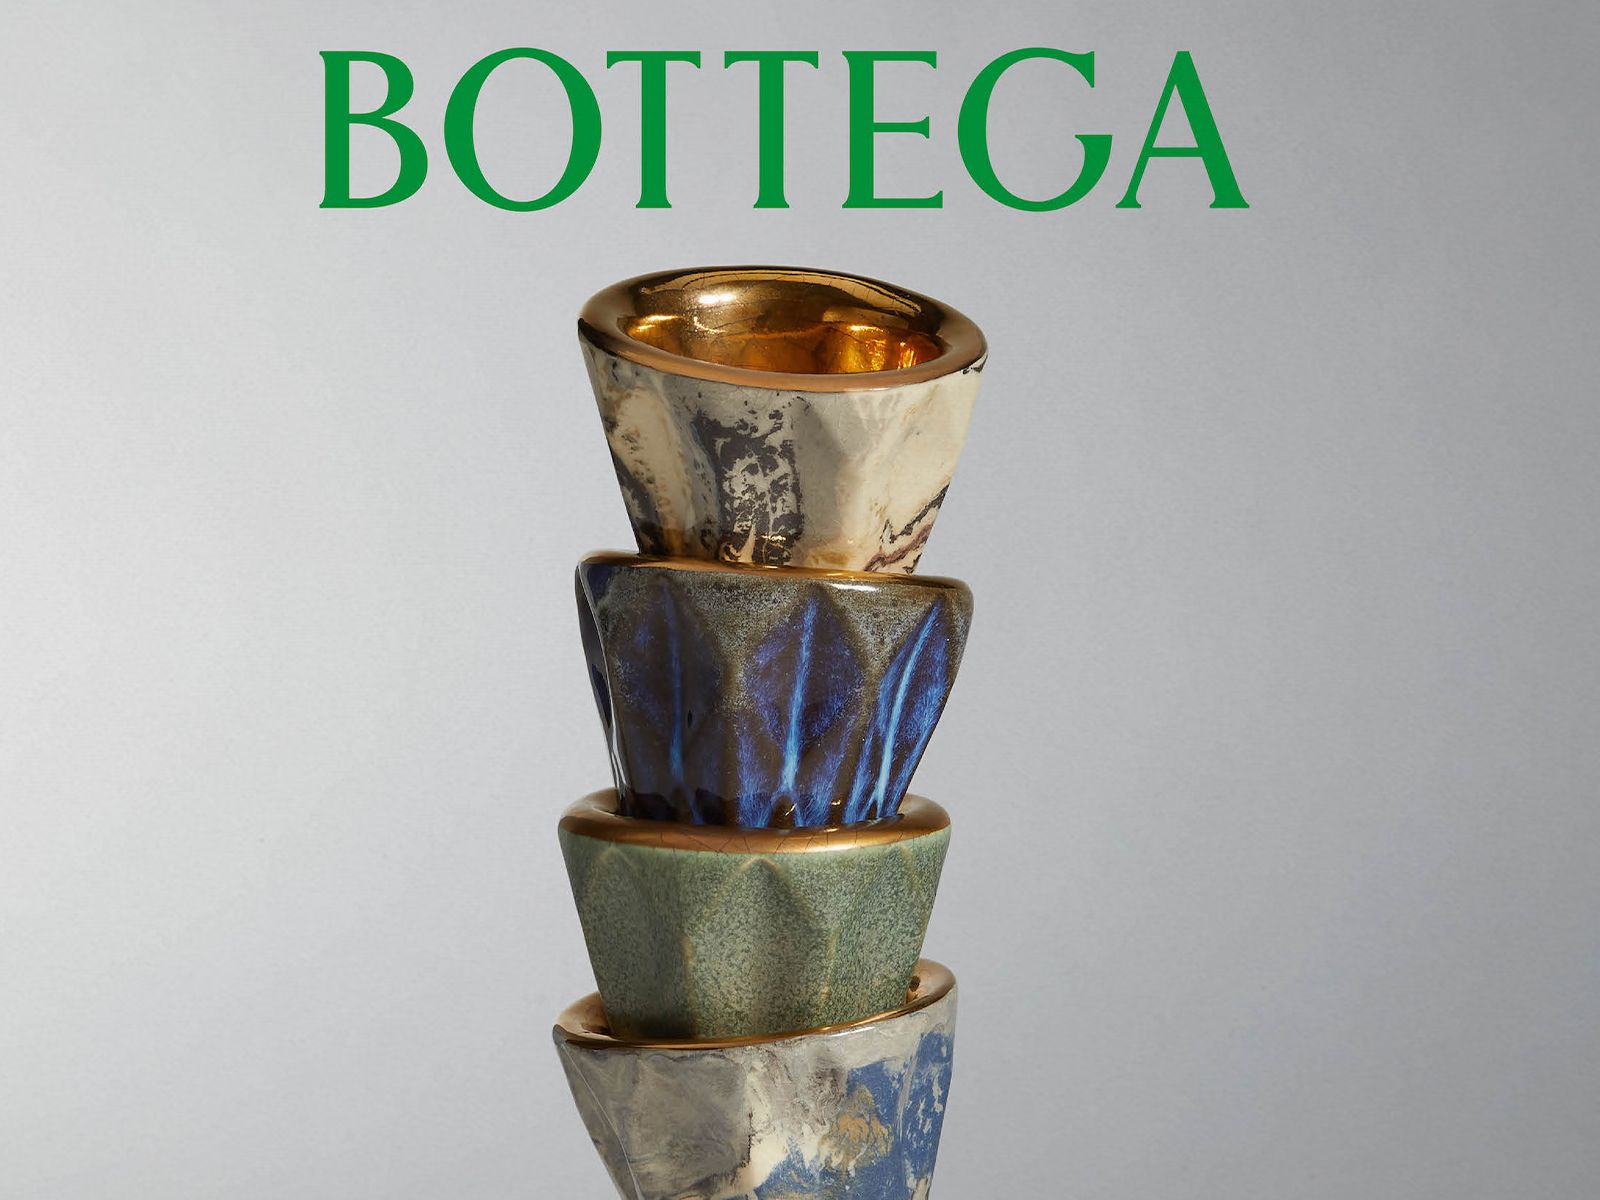 Bottega For Bottegas: Todo sobre el nuevo proyecto de Bottega Veneta